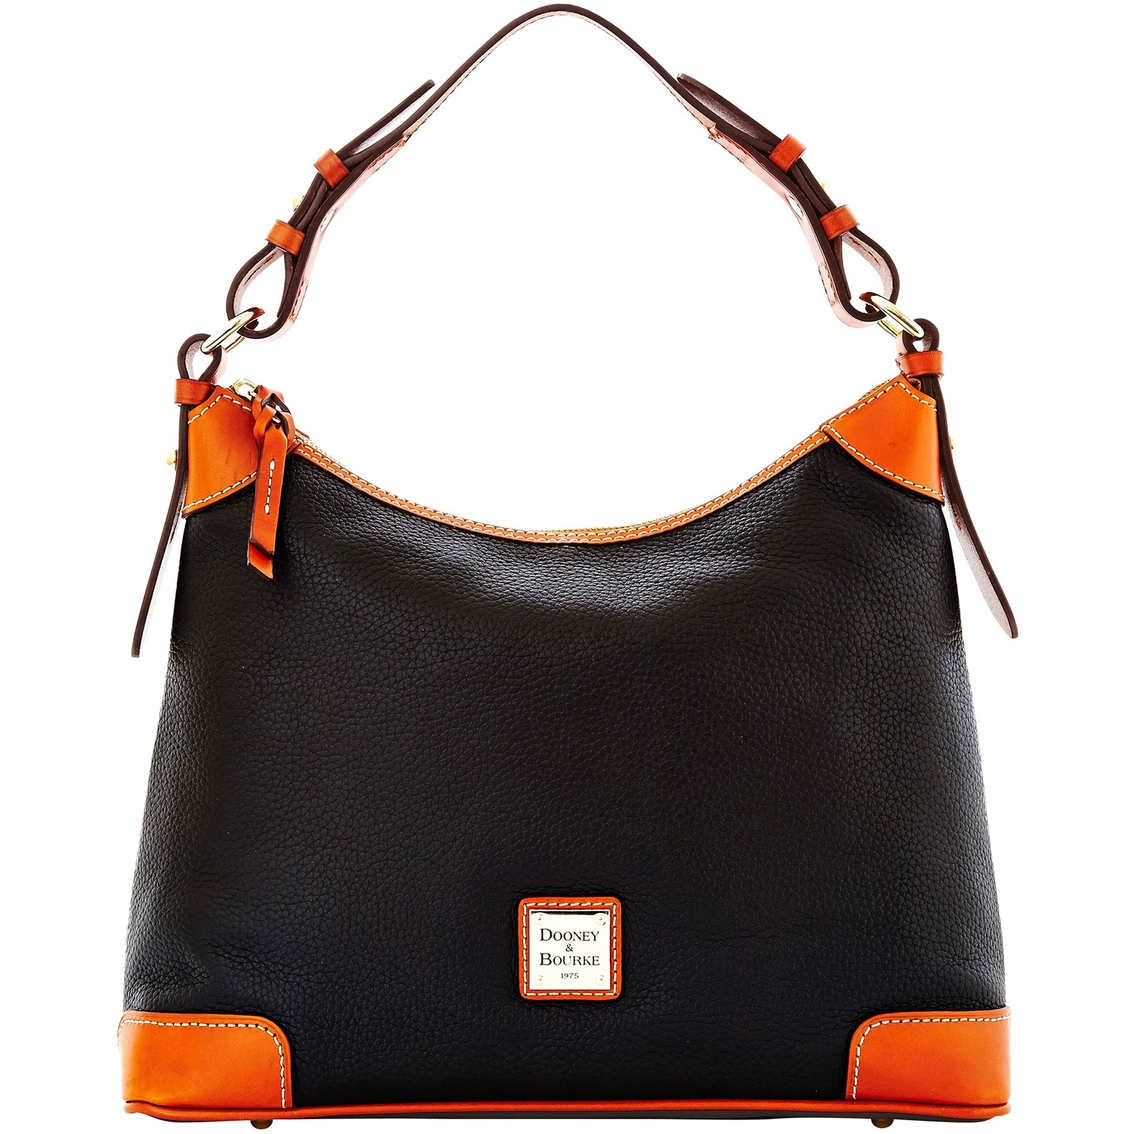 Dooney & Bourke Pebble Grain Hobo Handbag | Hobo Bags | Handbags ...